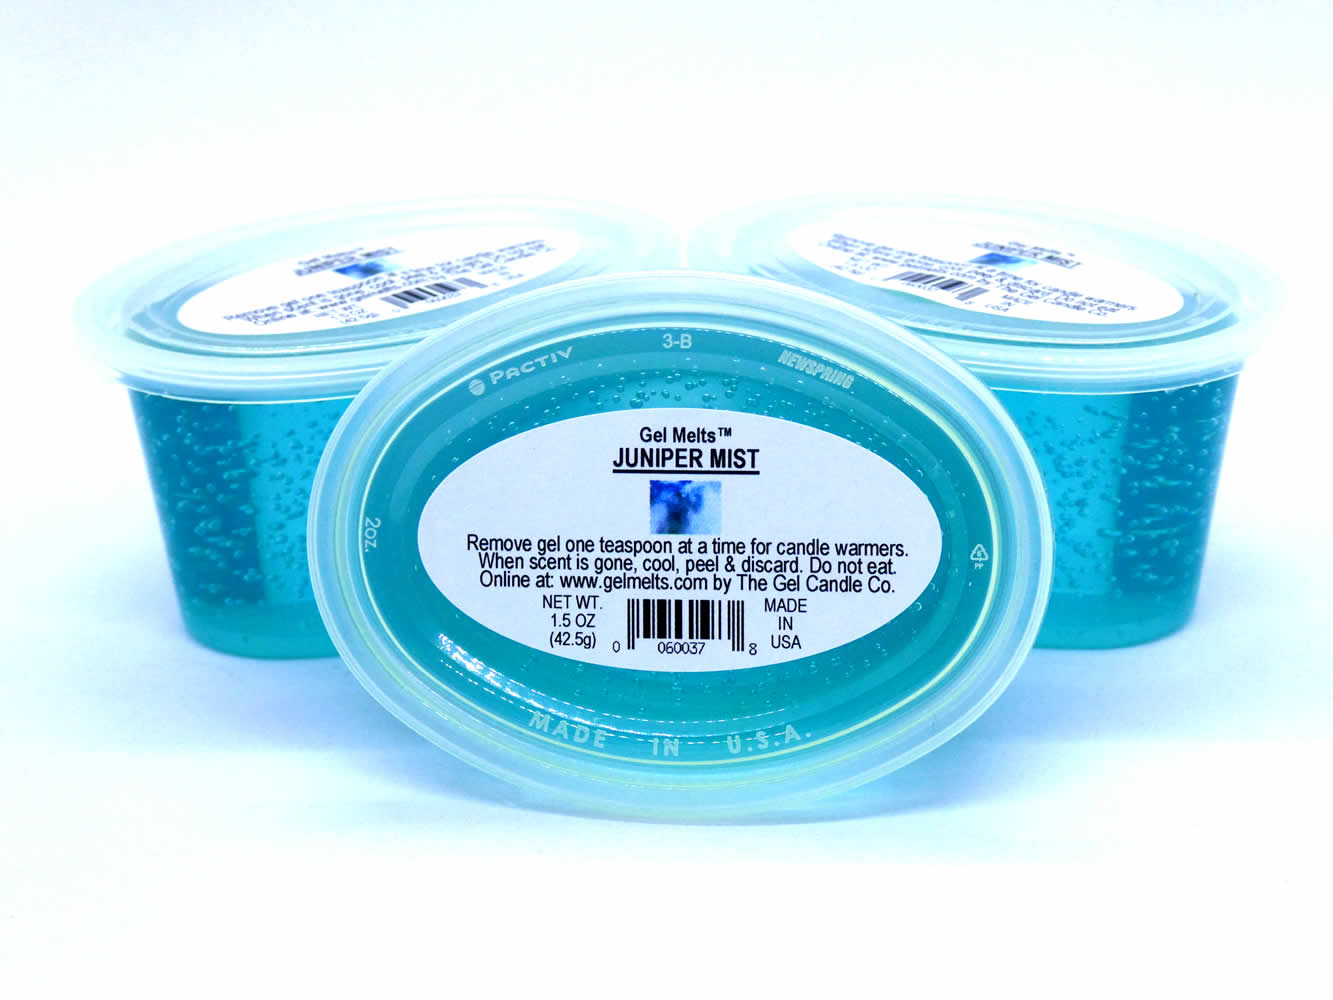 Juniper Mist scented Gel Melts™ Gel Wax for warmers - 3 pack